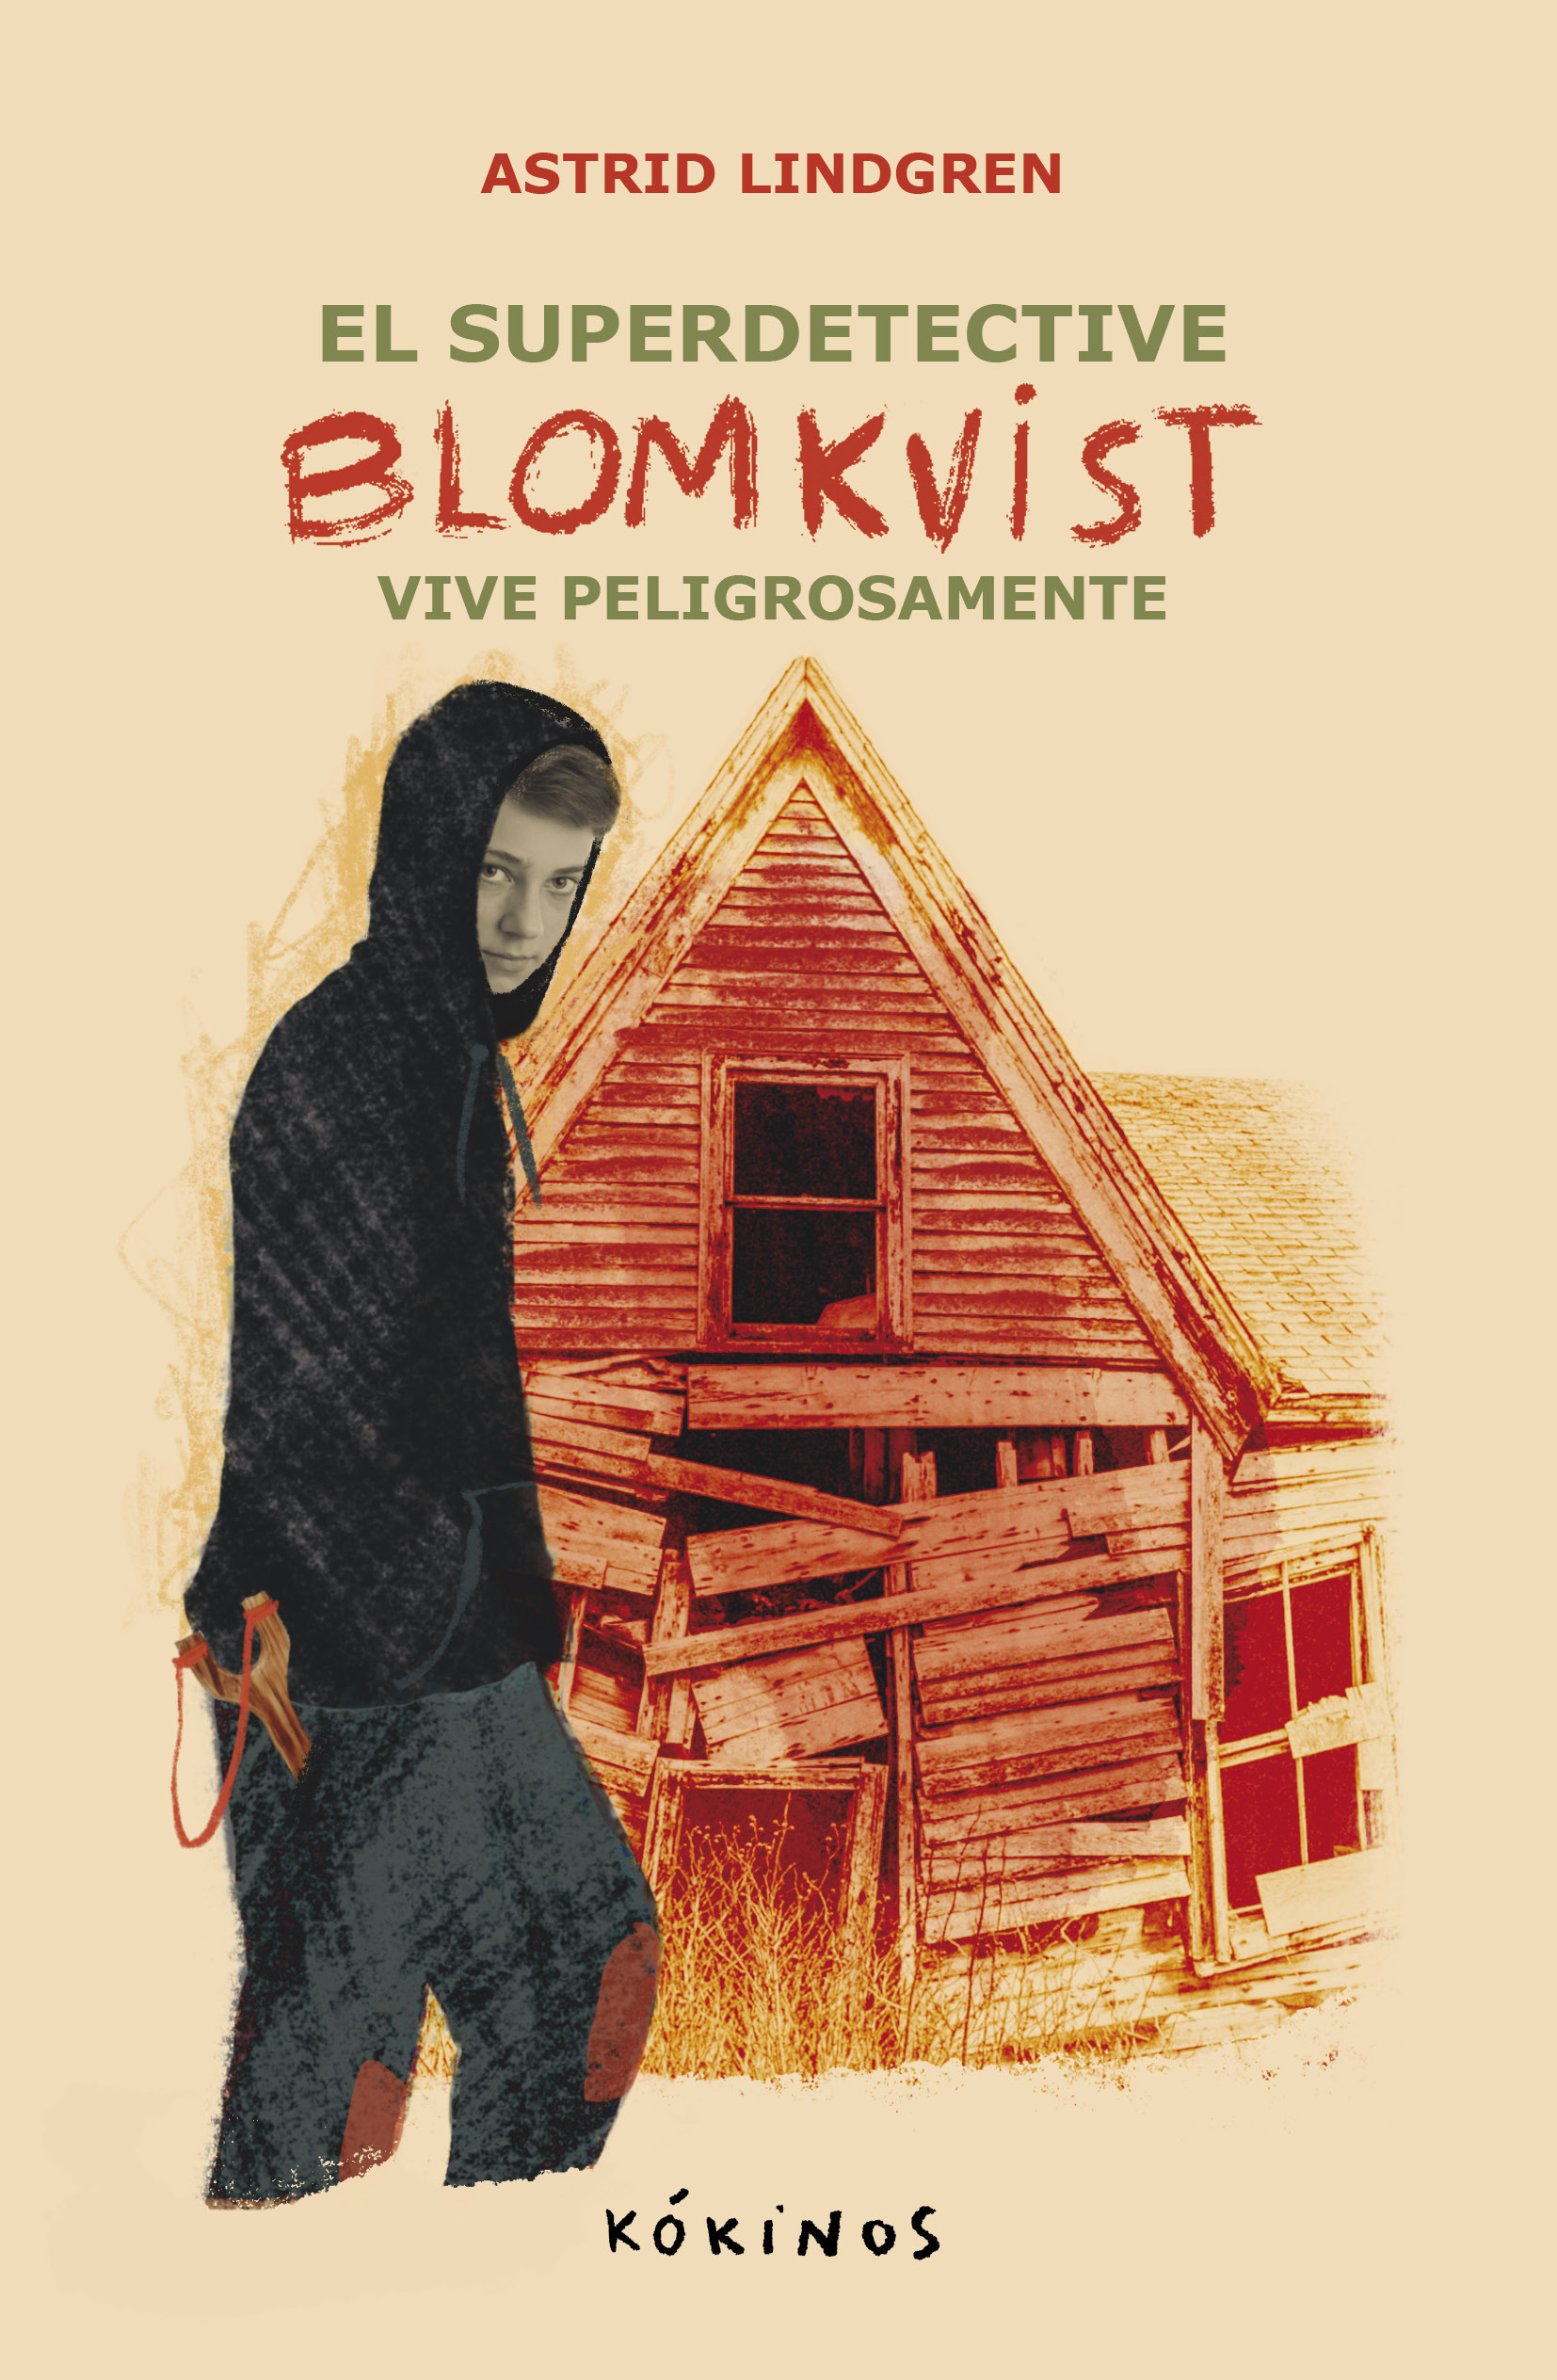 El super detective Blomkvist vive peligrosamente